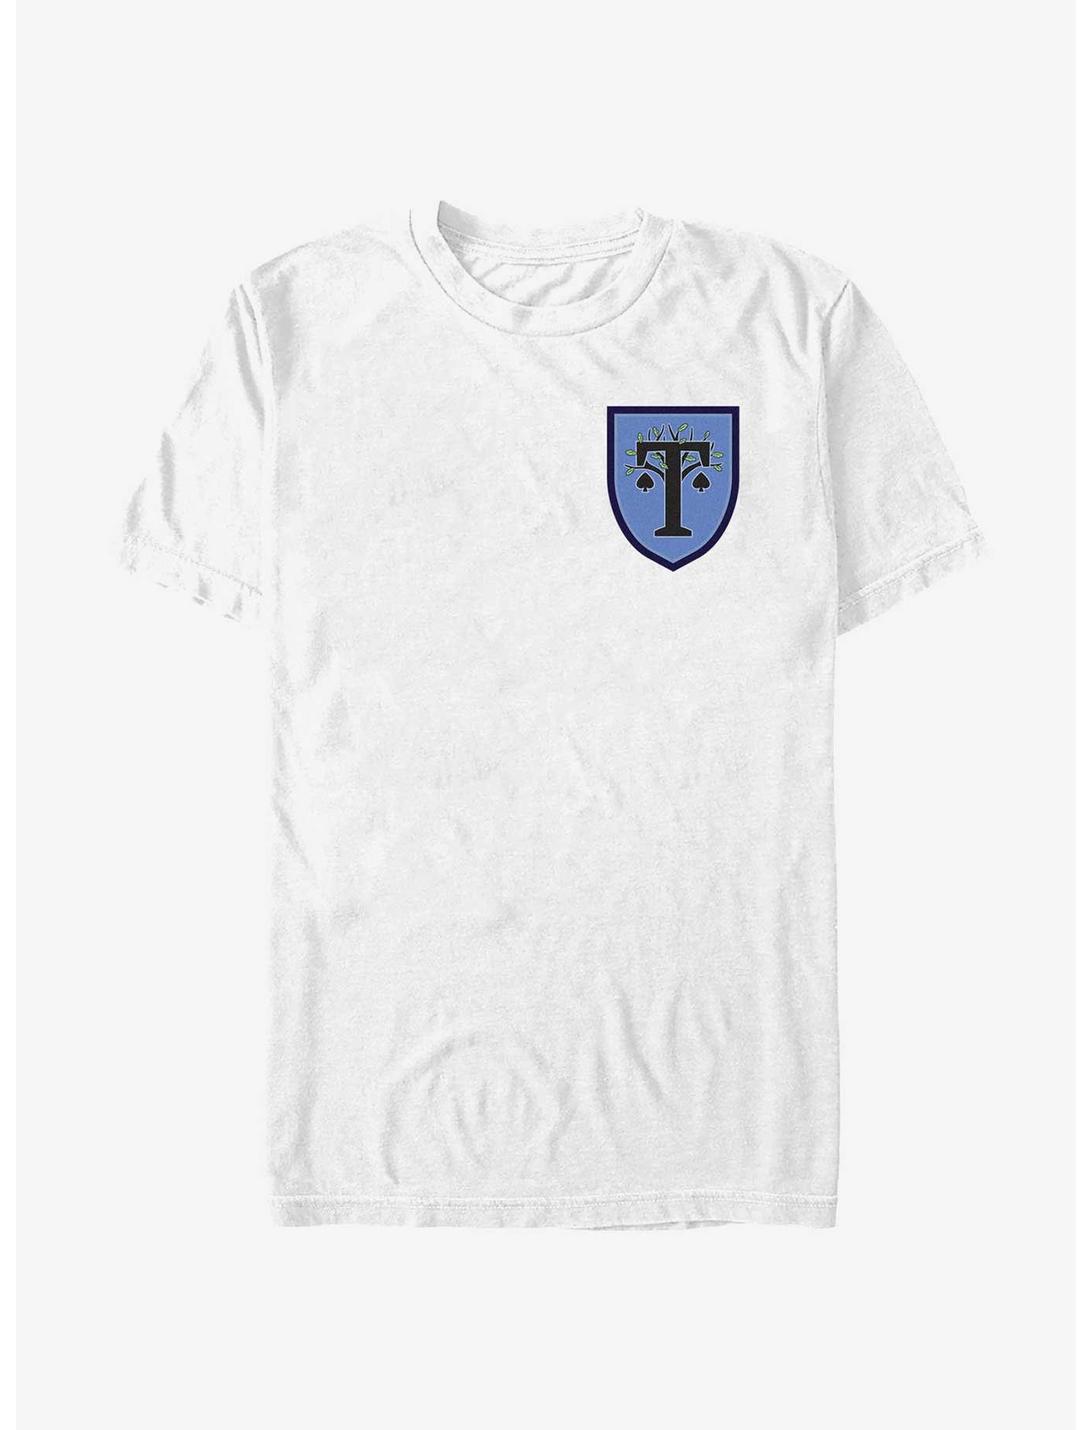 Heartstopper Truham School Budding Tree Badge T-Shirt, WHITE, hi-res